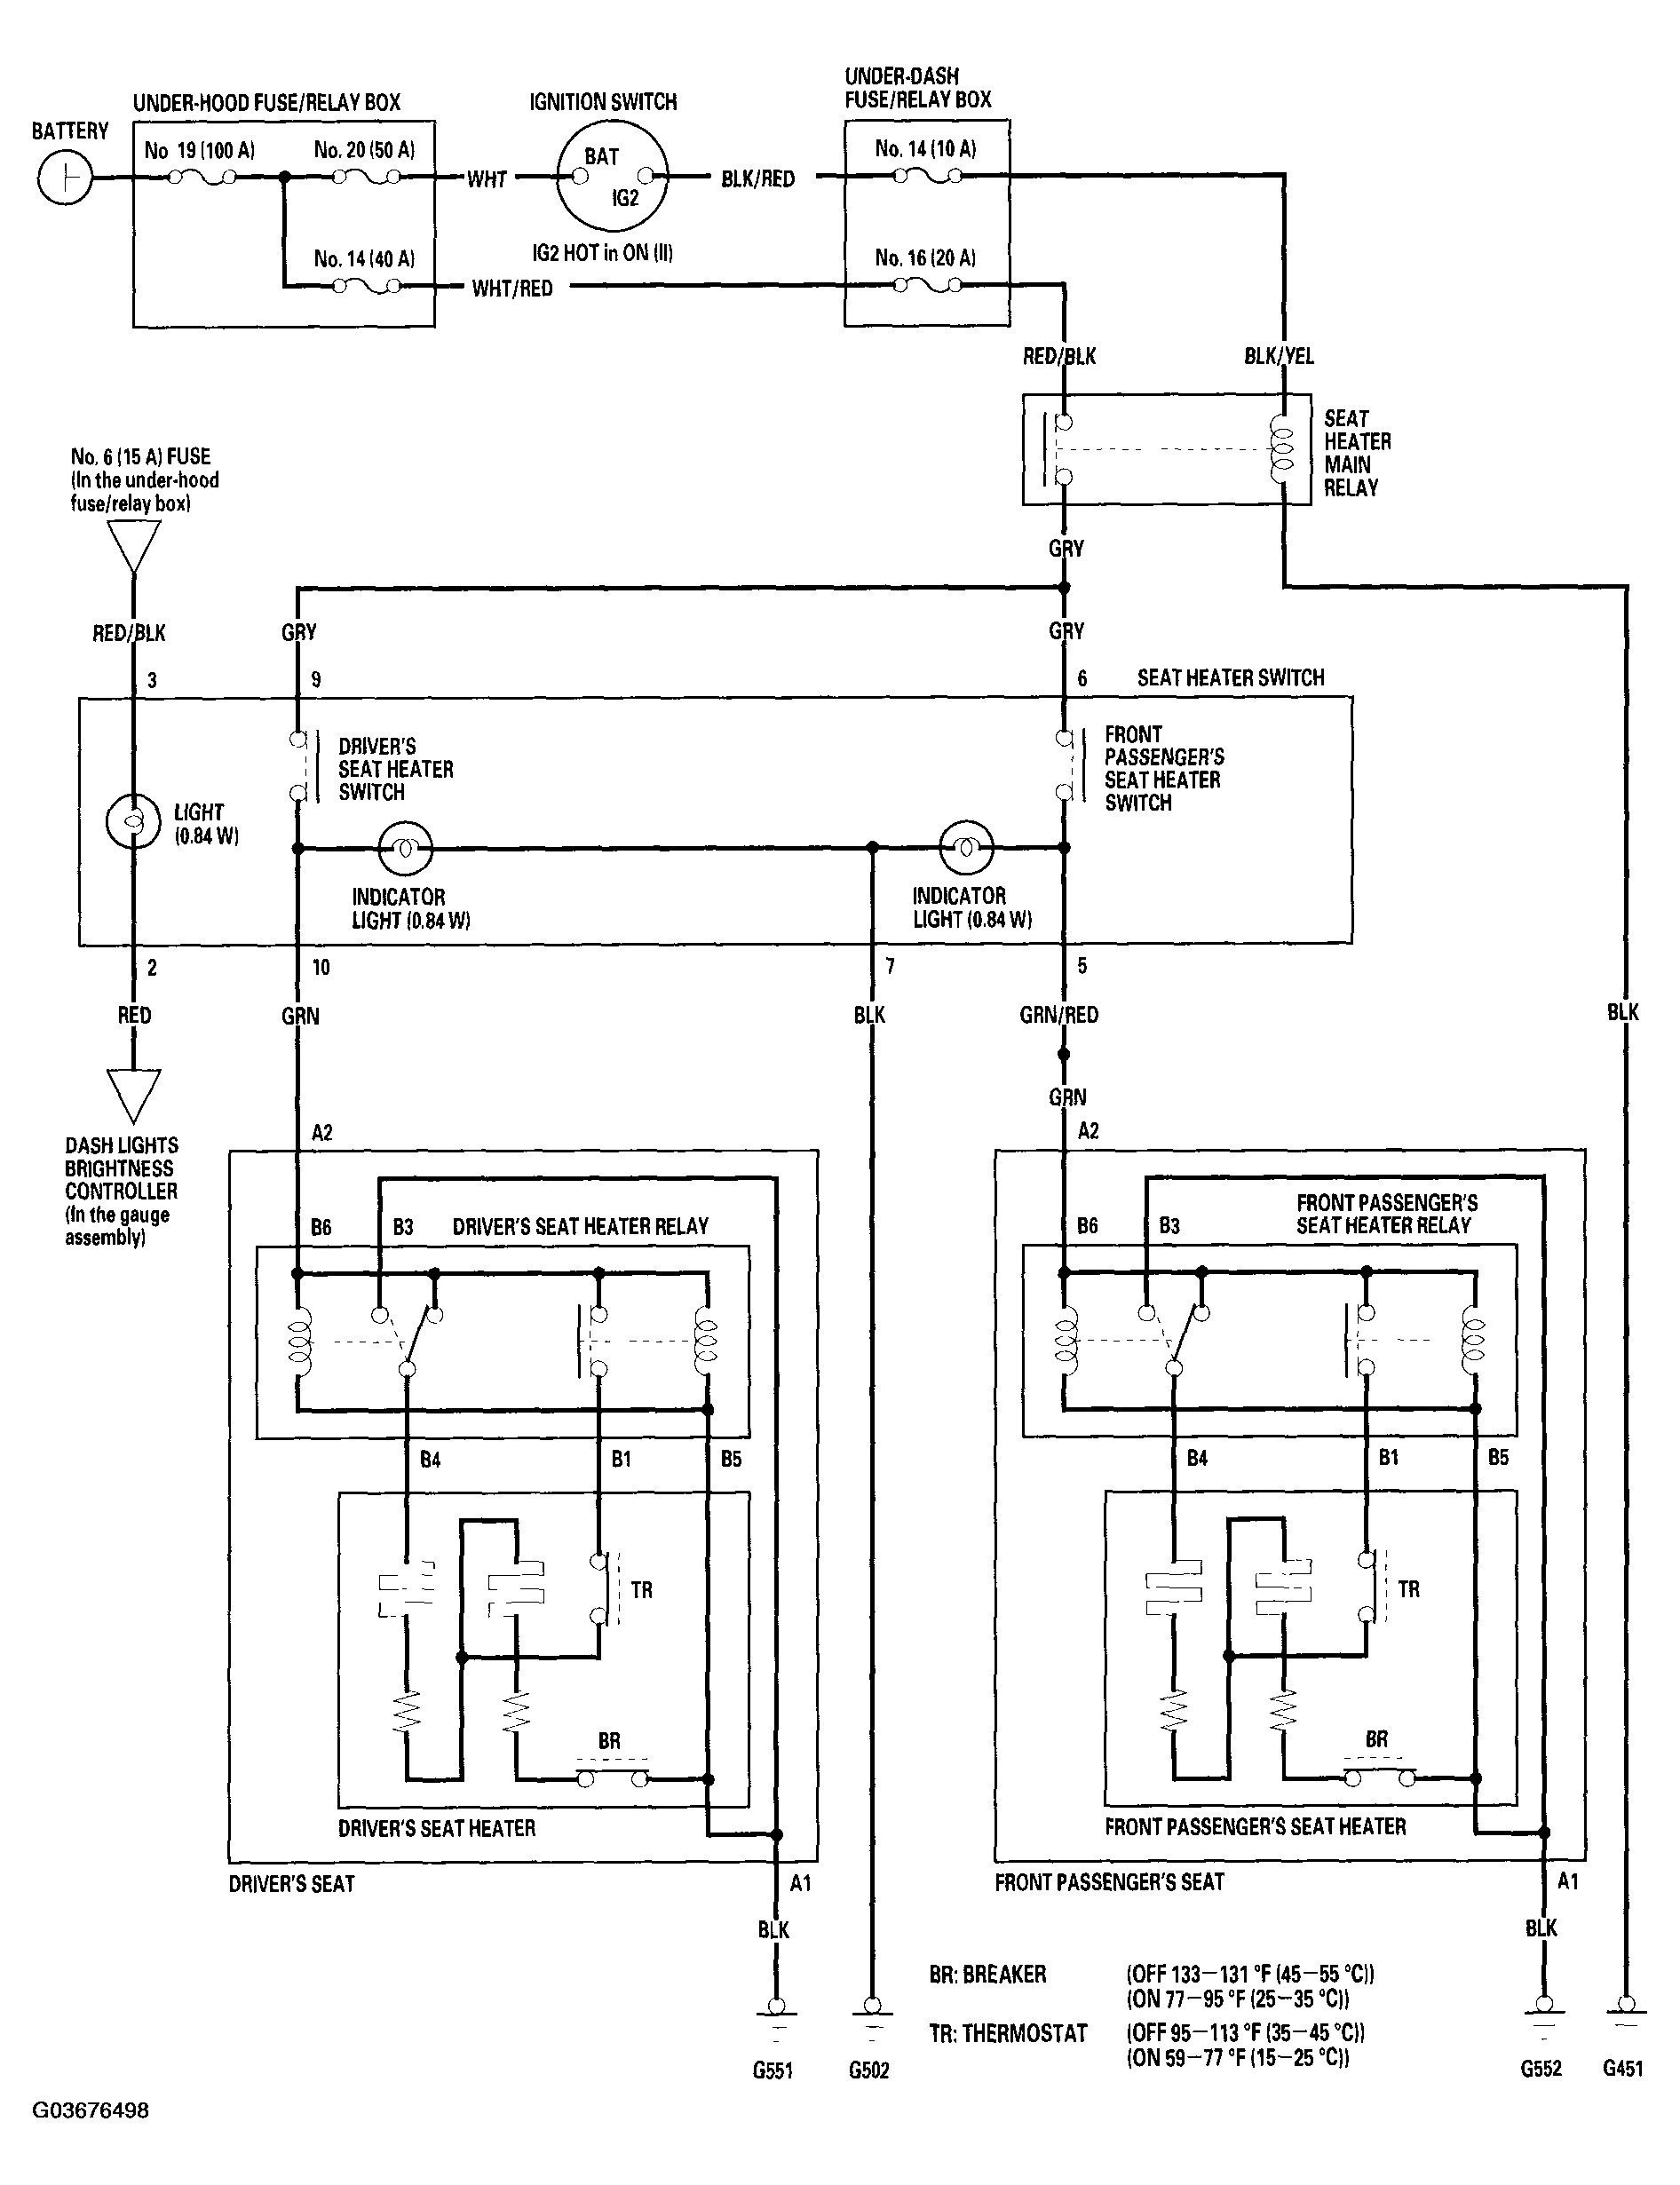 2000 Honda Accord Wiring Diagram Honda Ac Wiring Diagram Wiring Diagram Of 2000 Honda Accord Wiring Diagram